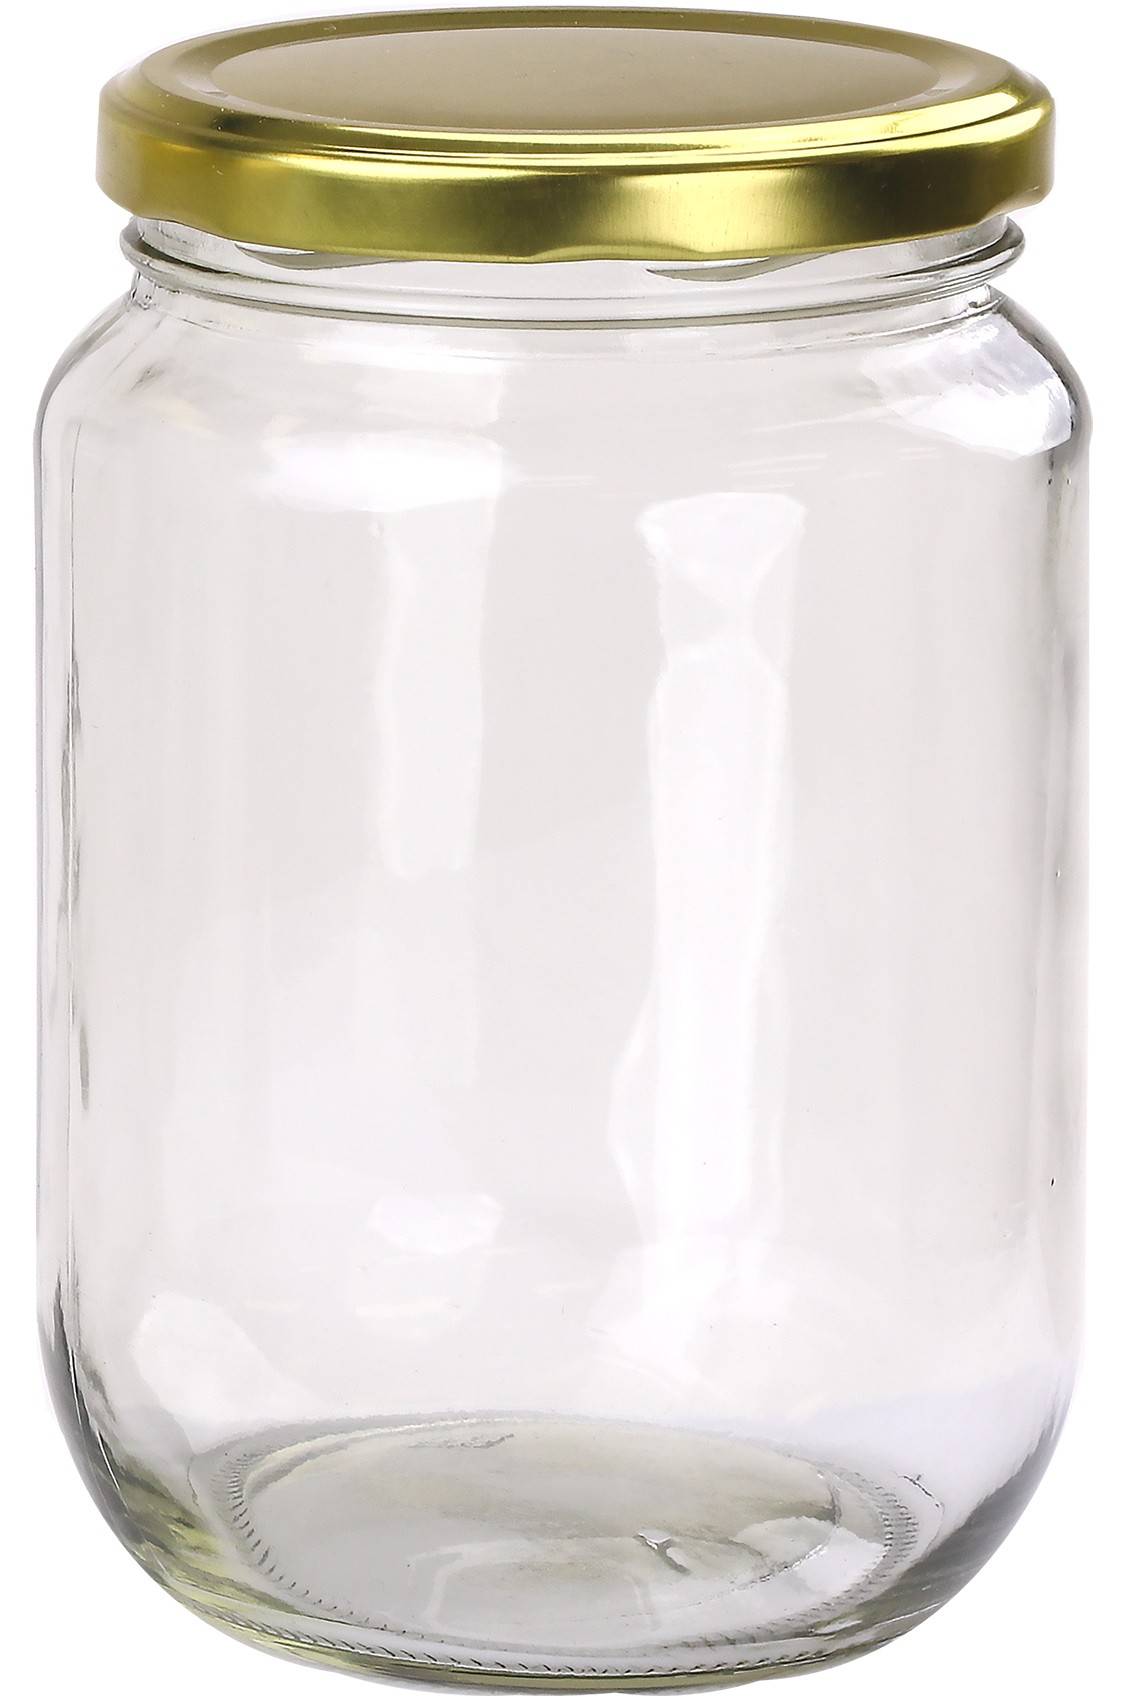 Carton 18 pcs Honey Jars - 500gm size - Hexagonal Glass Jar with Silver Lid